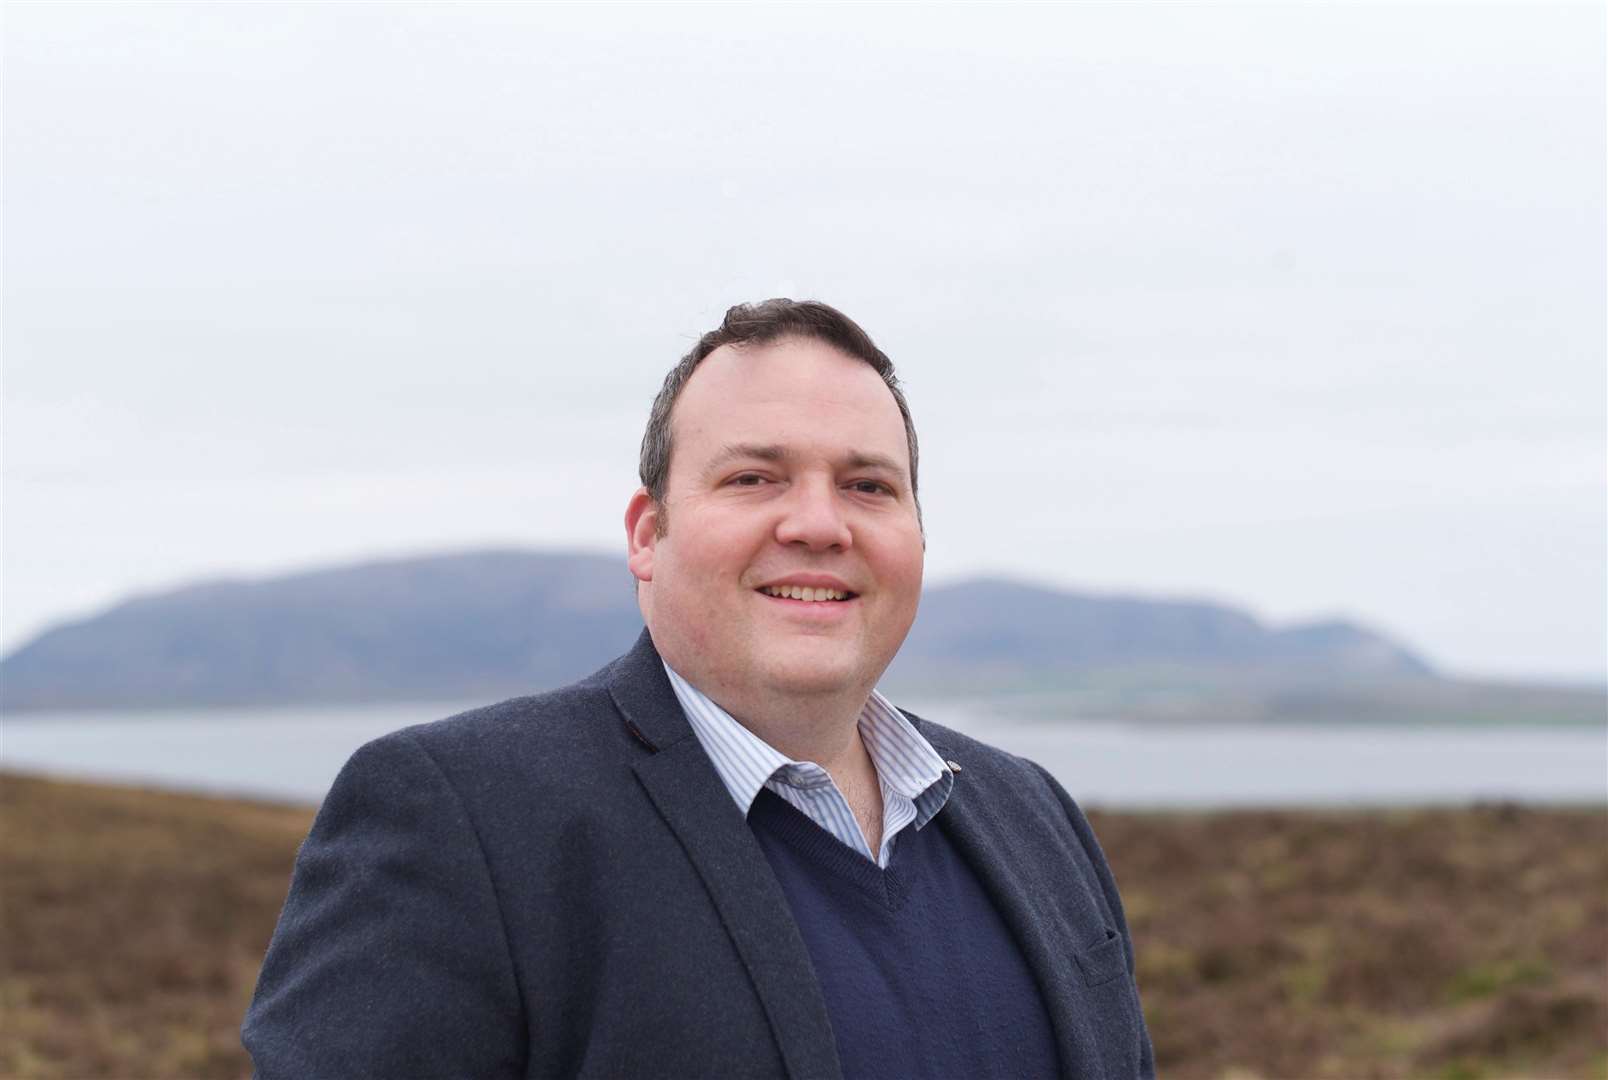 Scottish Conservative candidate Jamie Halcro-Johnston.